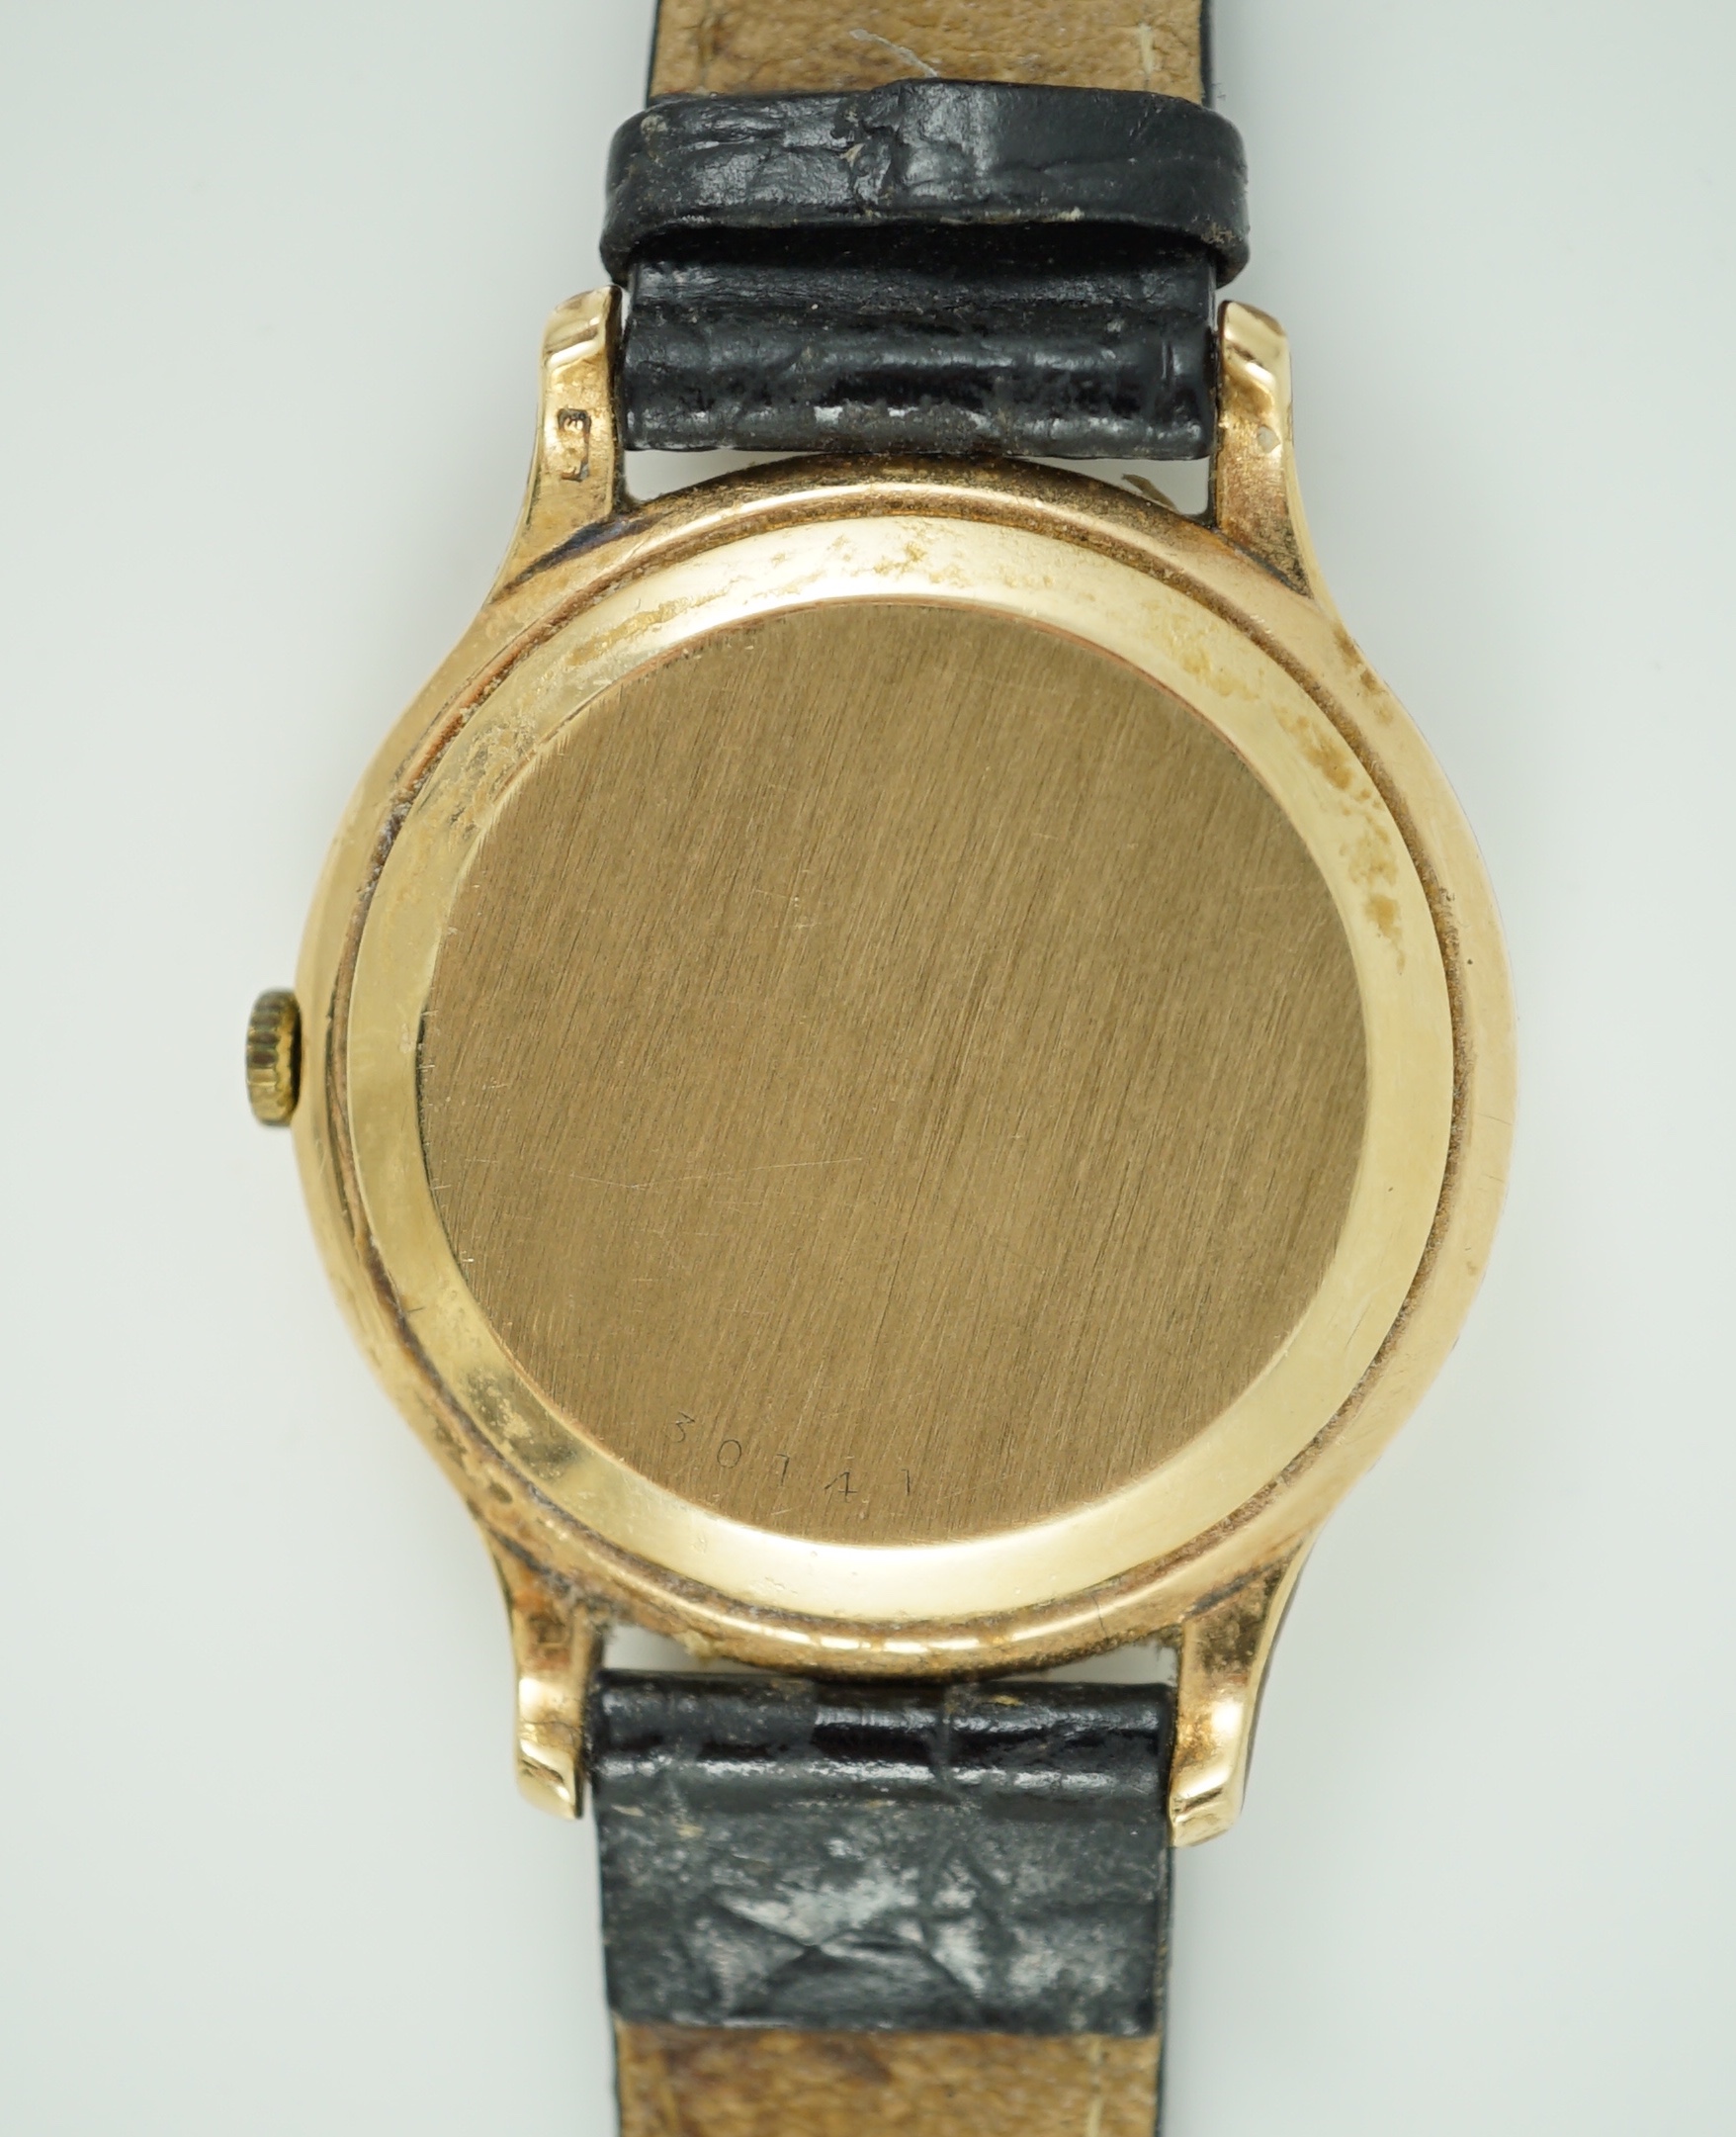 A gentleman's 9ct gold Jaeger LeCoultre manual wind dress wrist watch, on associated strap